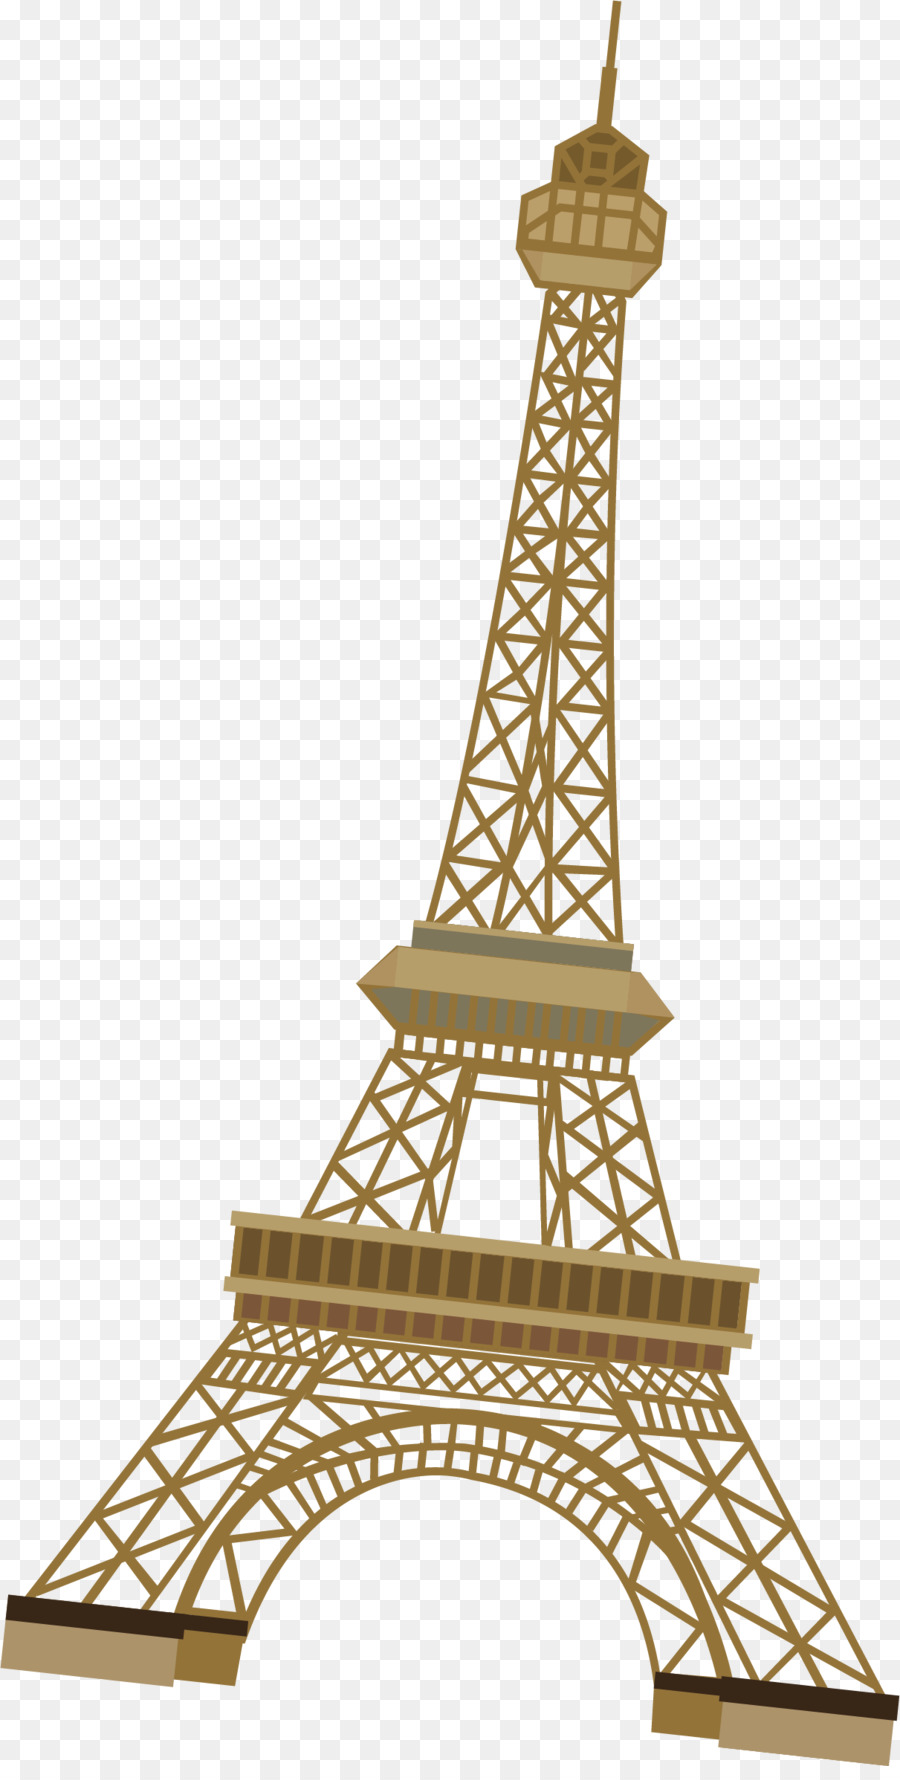 Eiffel Tower Euclidean vector - Paris Tower vector png download - 1211*2376 - Free Transparent Eiffel Tower png Download.